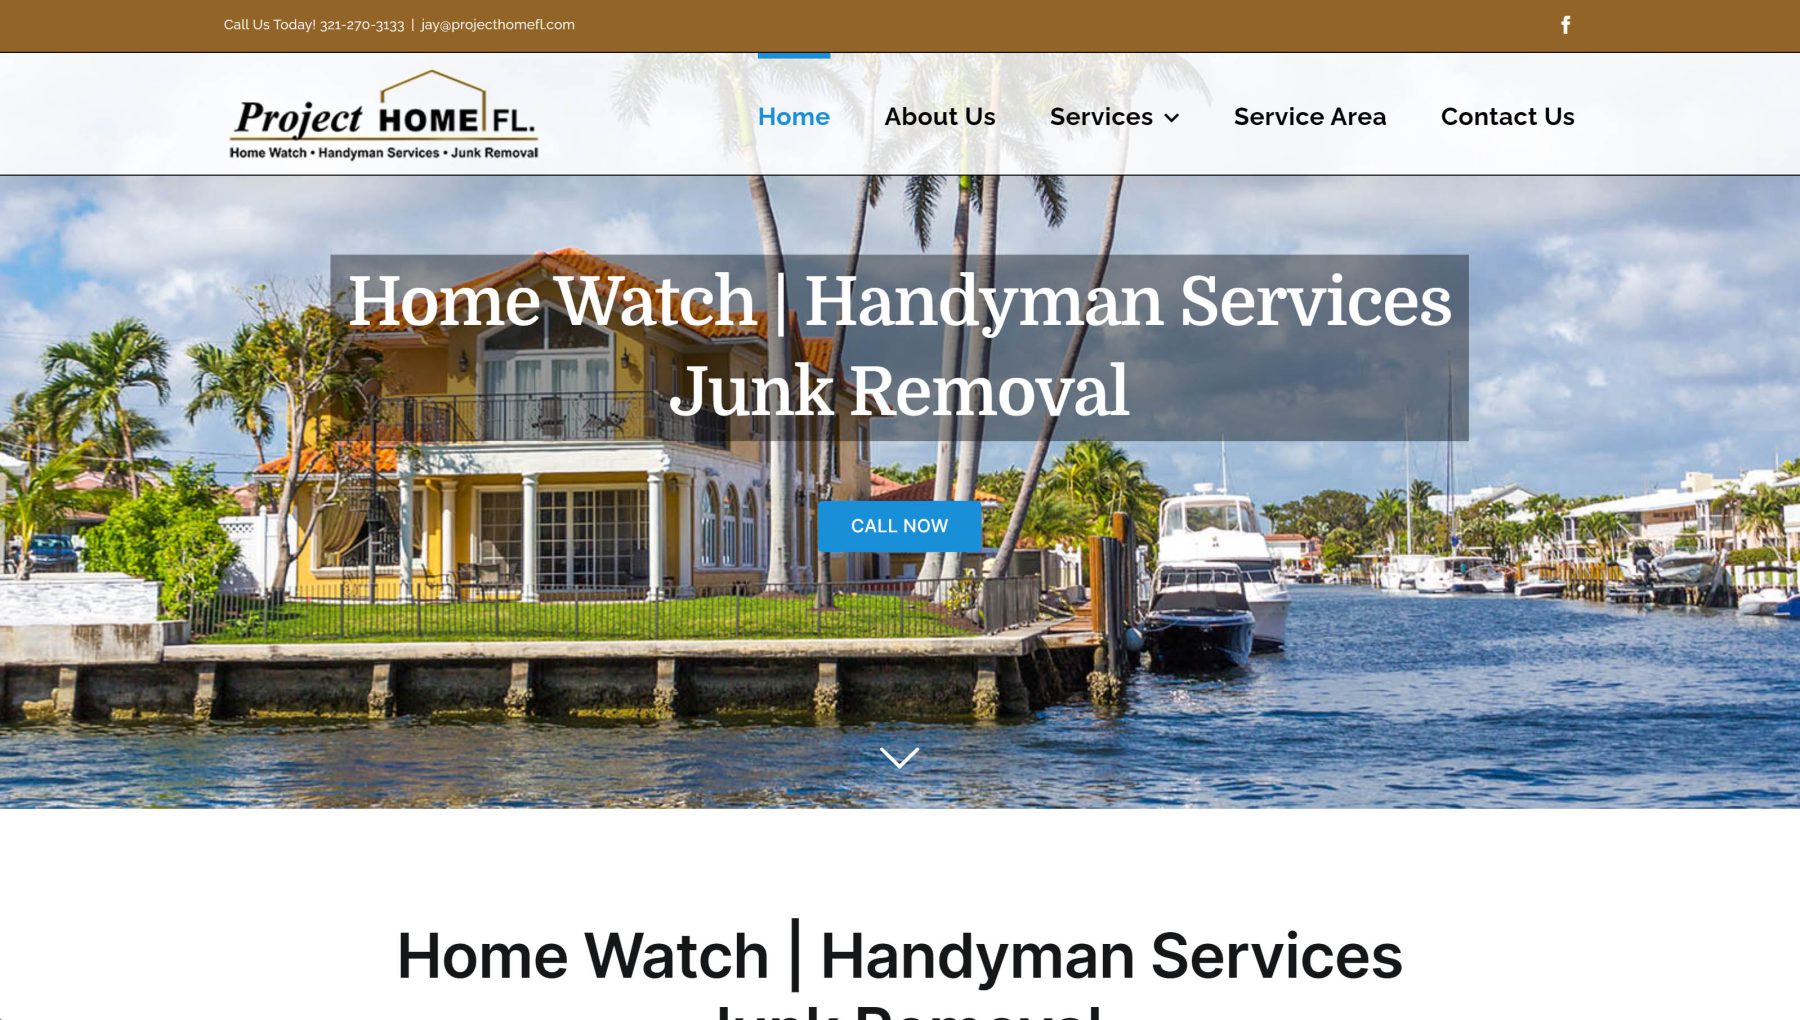 Homewatch Handyman Services Website Design PPC Google Ads Marketing